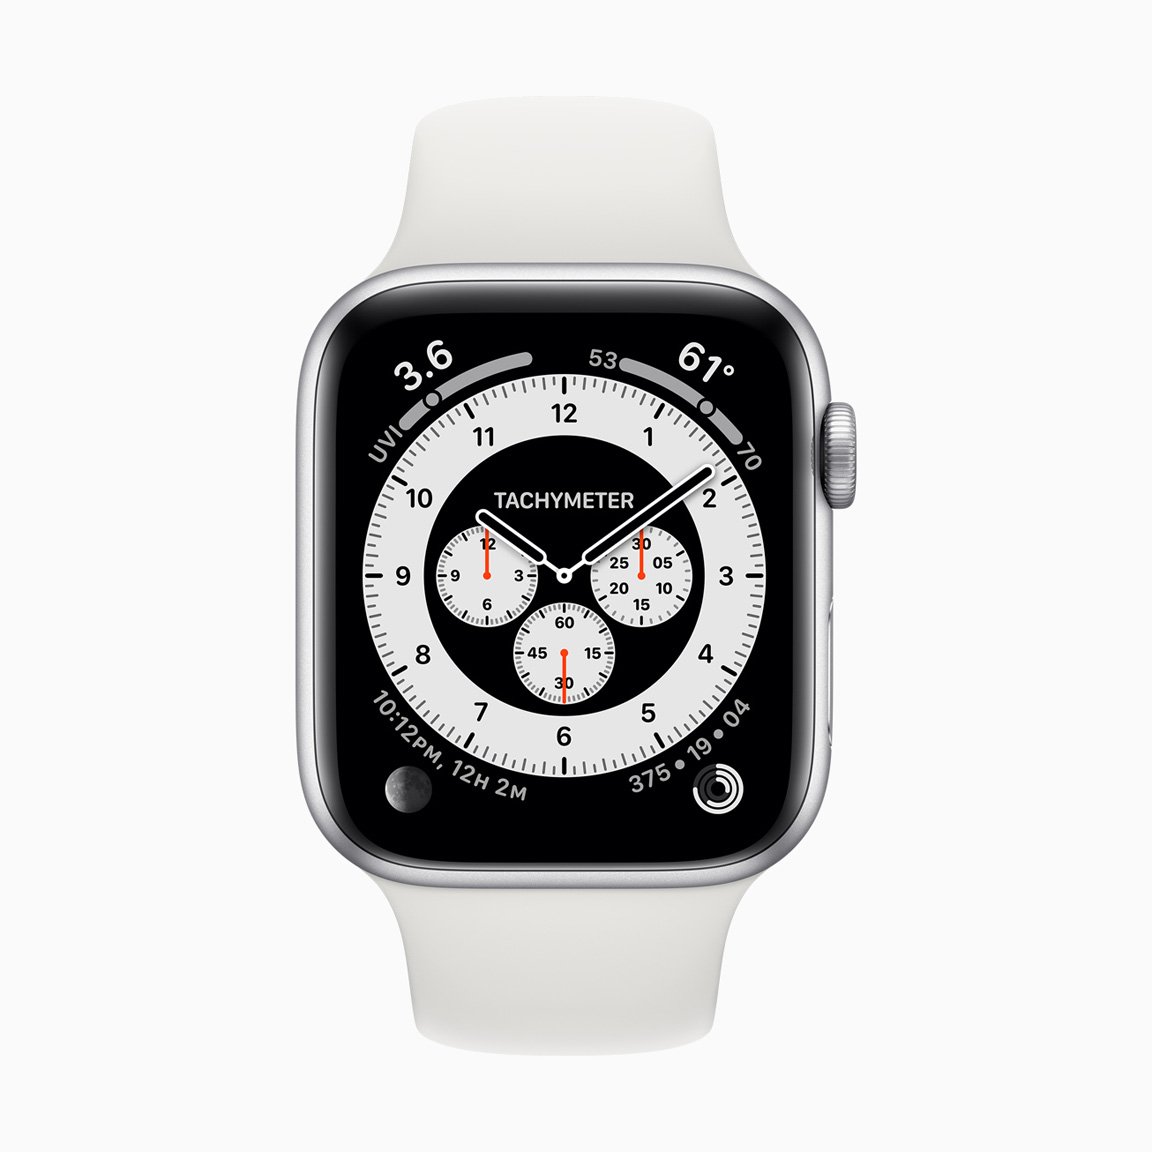 Apple Watch Chronograph Pro watch face